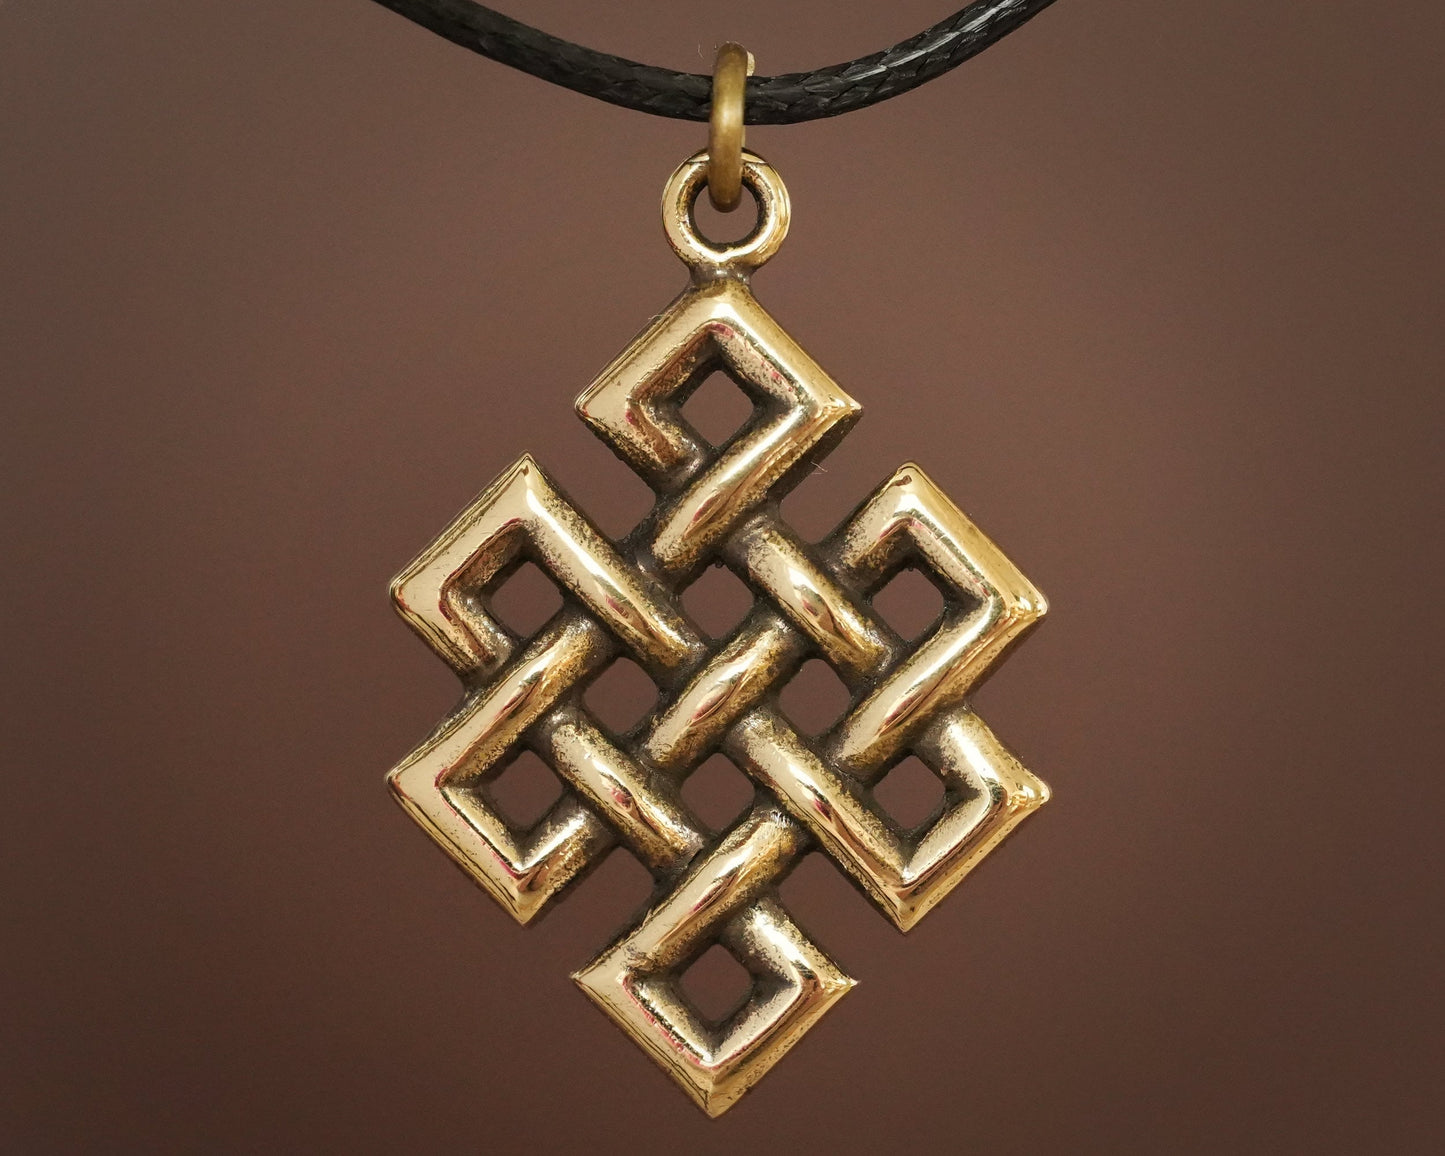 Handmade Tibetan Endless Love Knot Necklace Pendant for Women Japanese Meaningful Meditation Buddhist Jewelry With Adjustable String - Baldur Jewelry